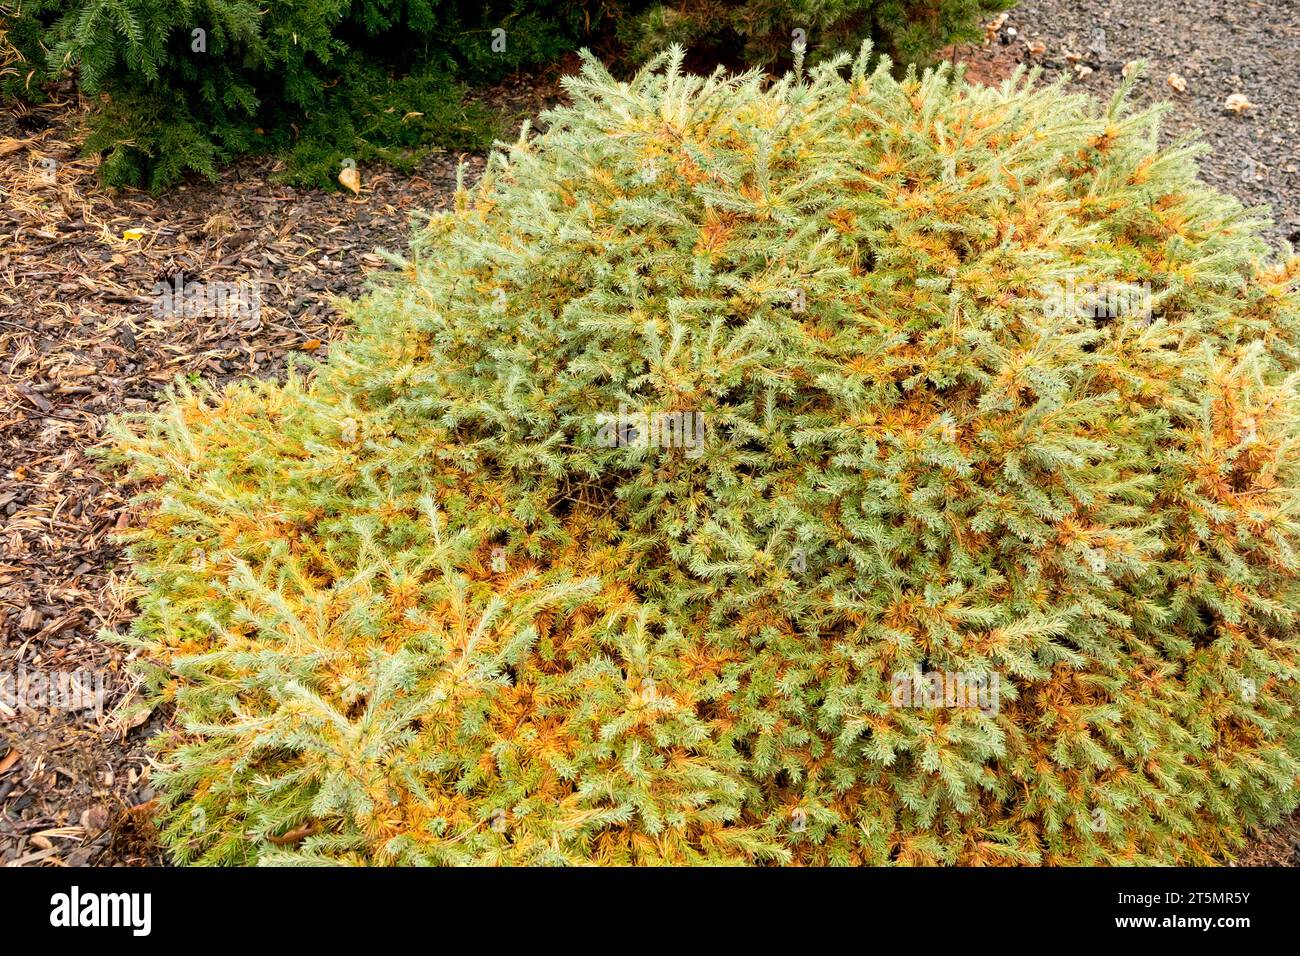 European larch, Larix decidua 'Oberforster Karsten', dwarf, Conifer, Tree, Autumn, Foliage in Garden Stock Photo